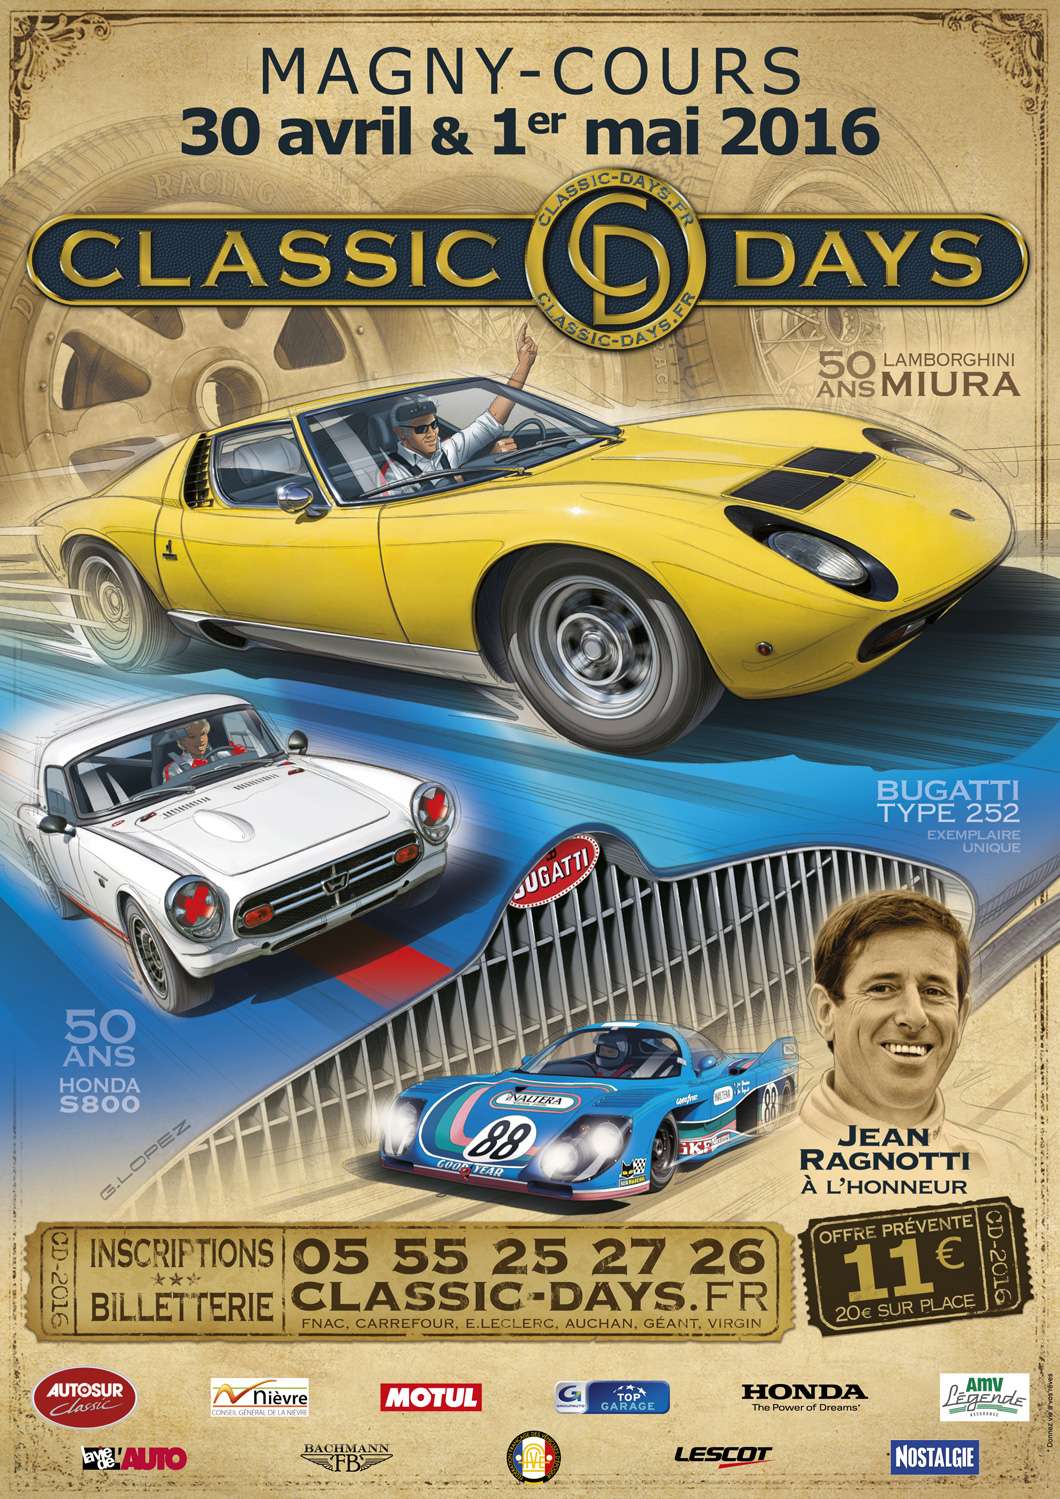 classic days - Classic Days 2016 Organisation de rencontre - Page 2 Classi10